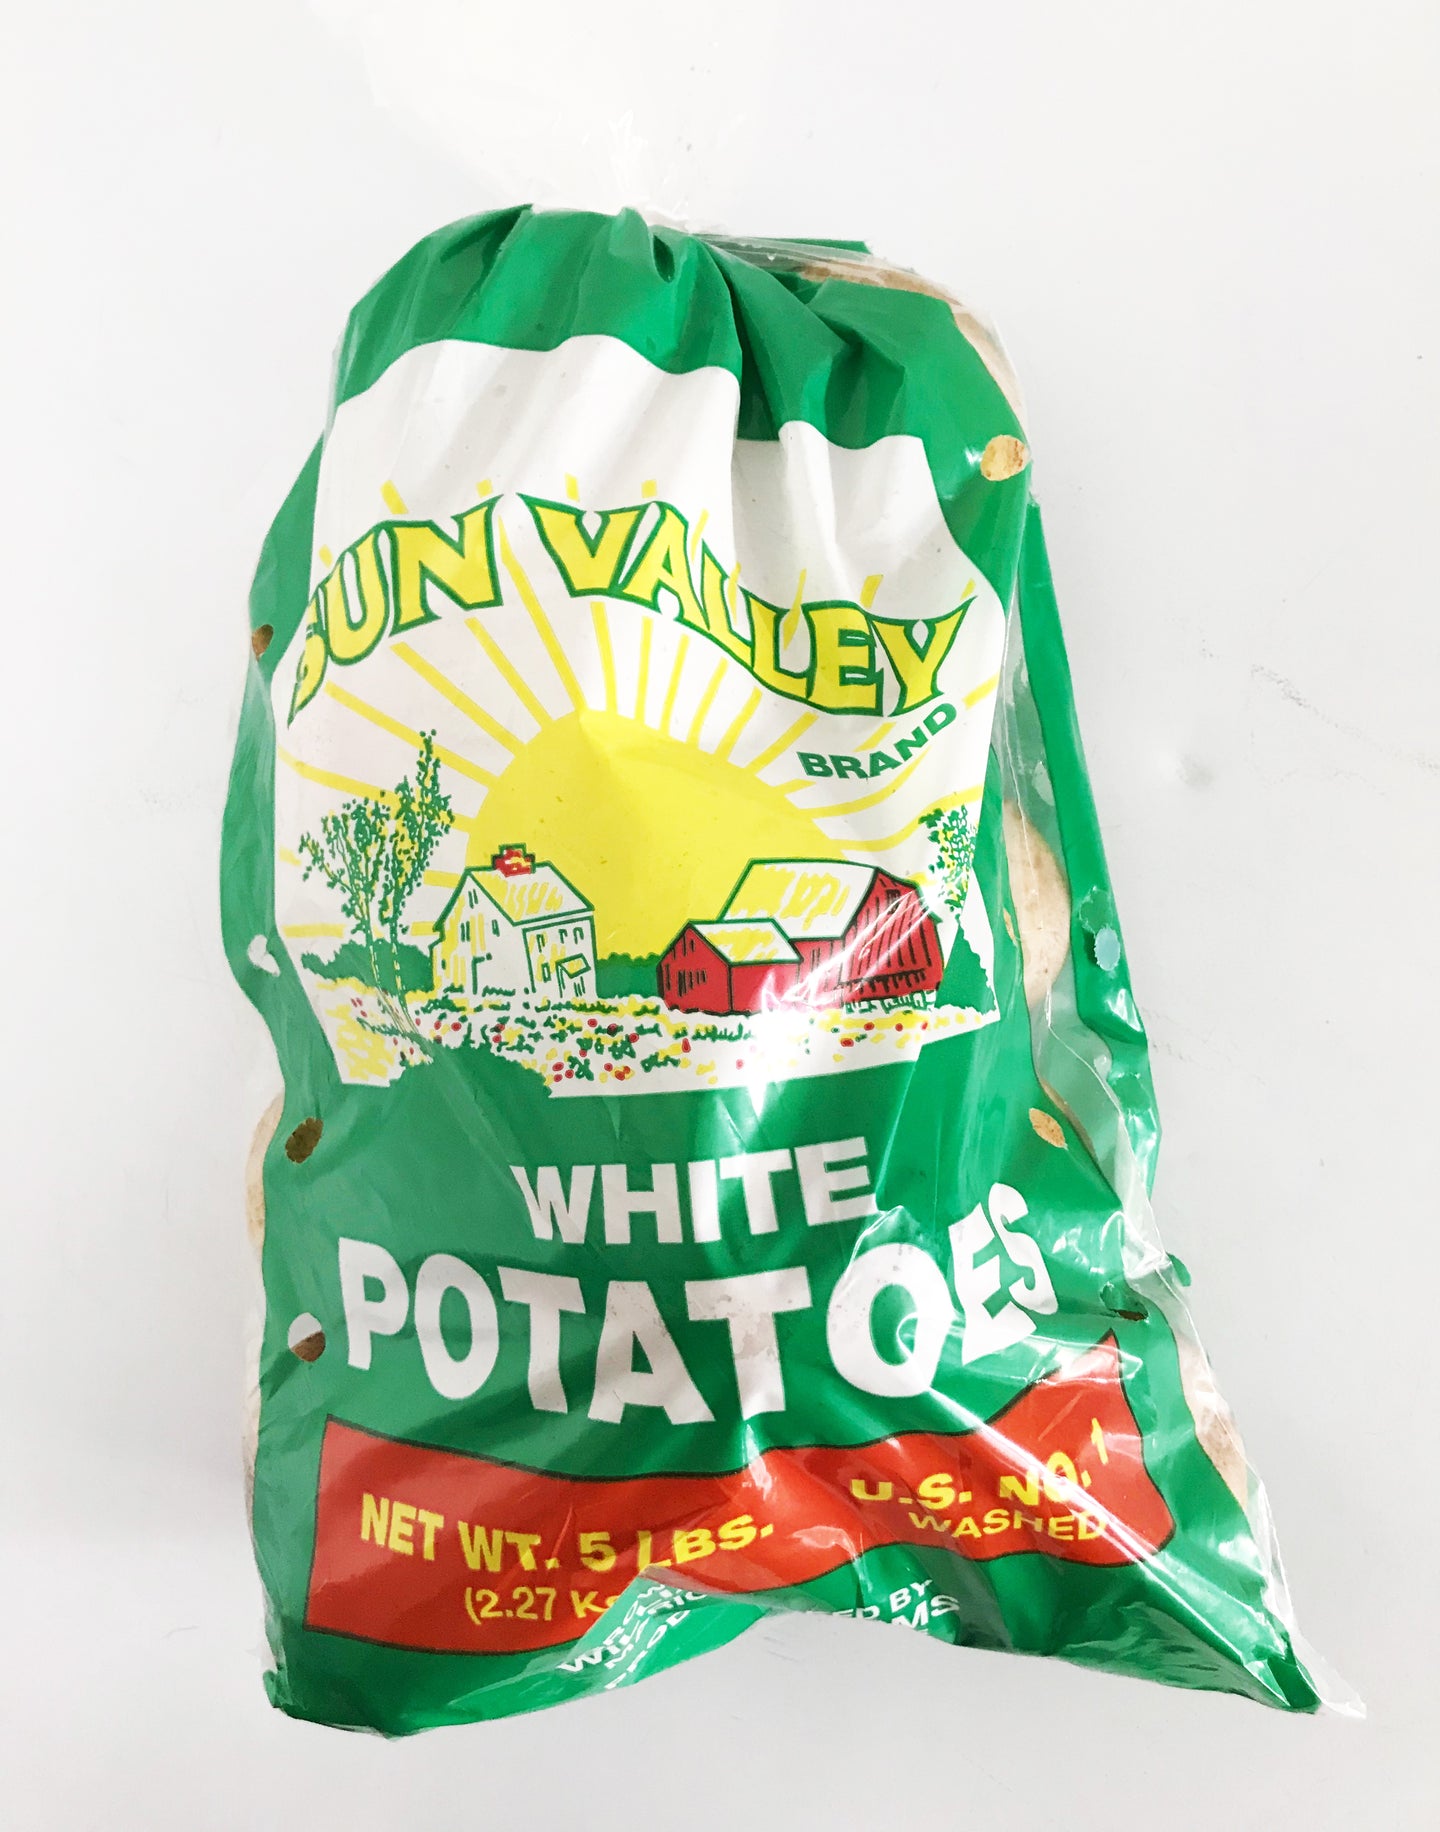 Sun Valley White Potatoes